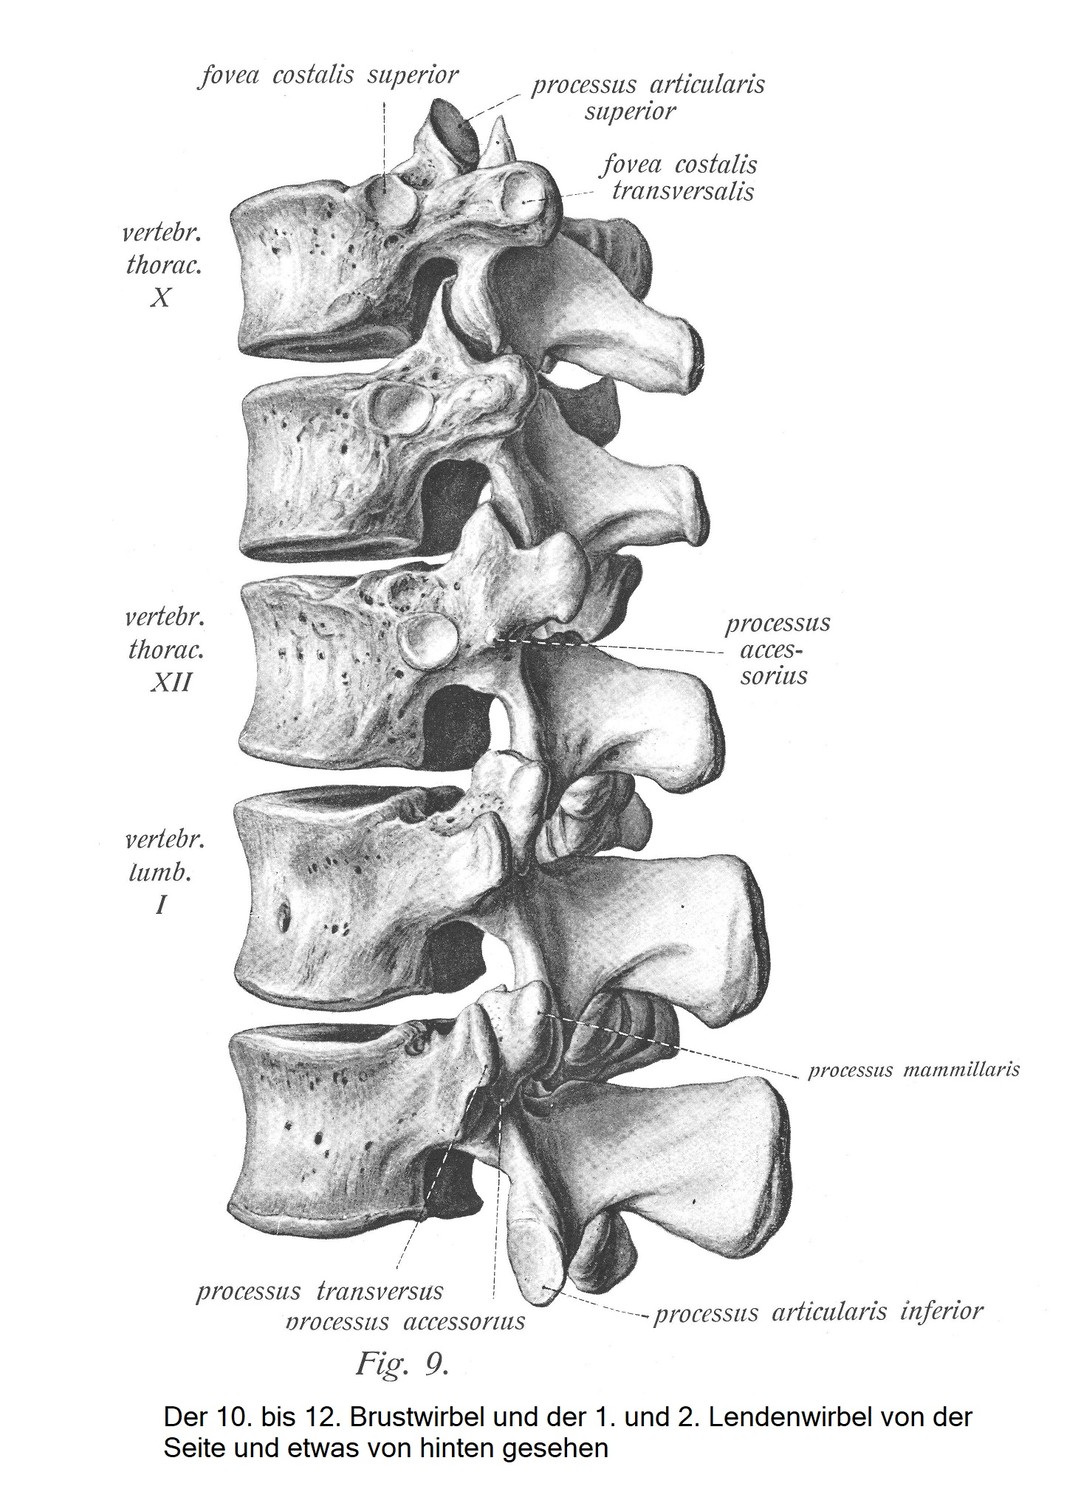 Brust- und Lendenwirbel, vertebrae thoracales et lumbales